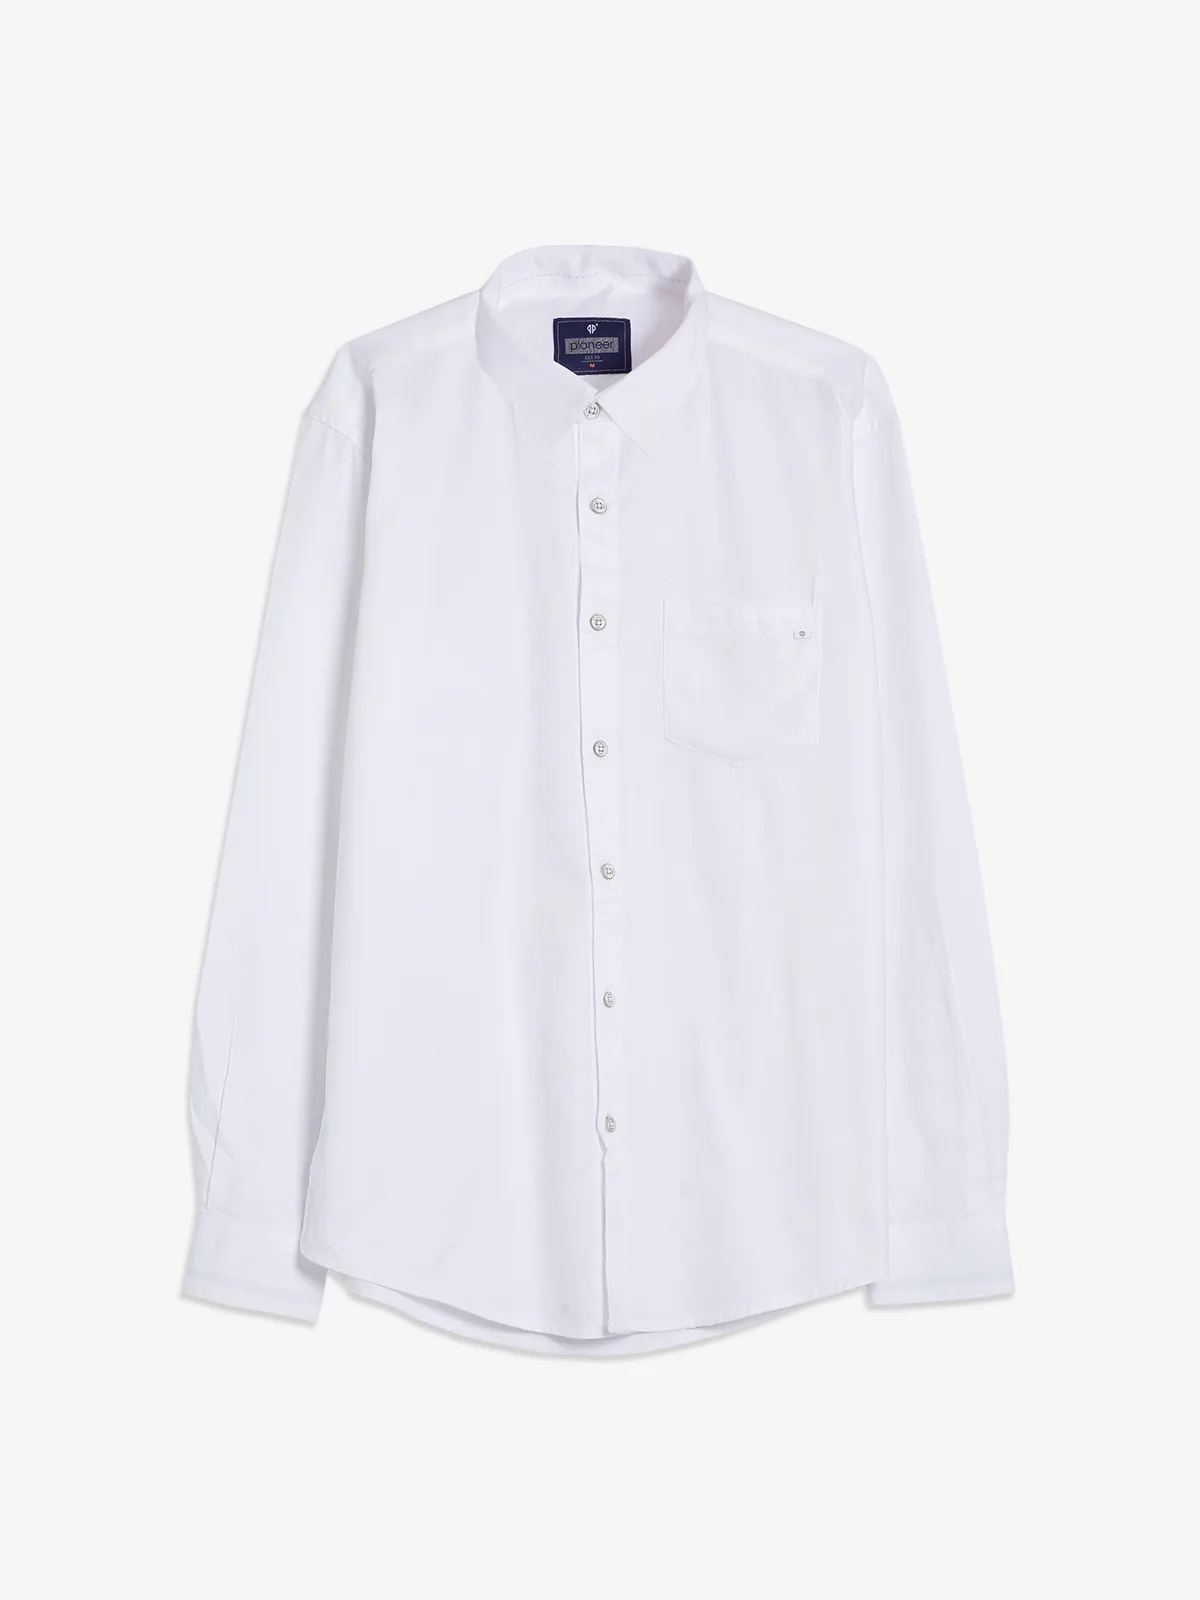 Pioneer white cotton plain shirt